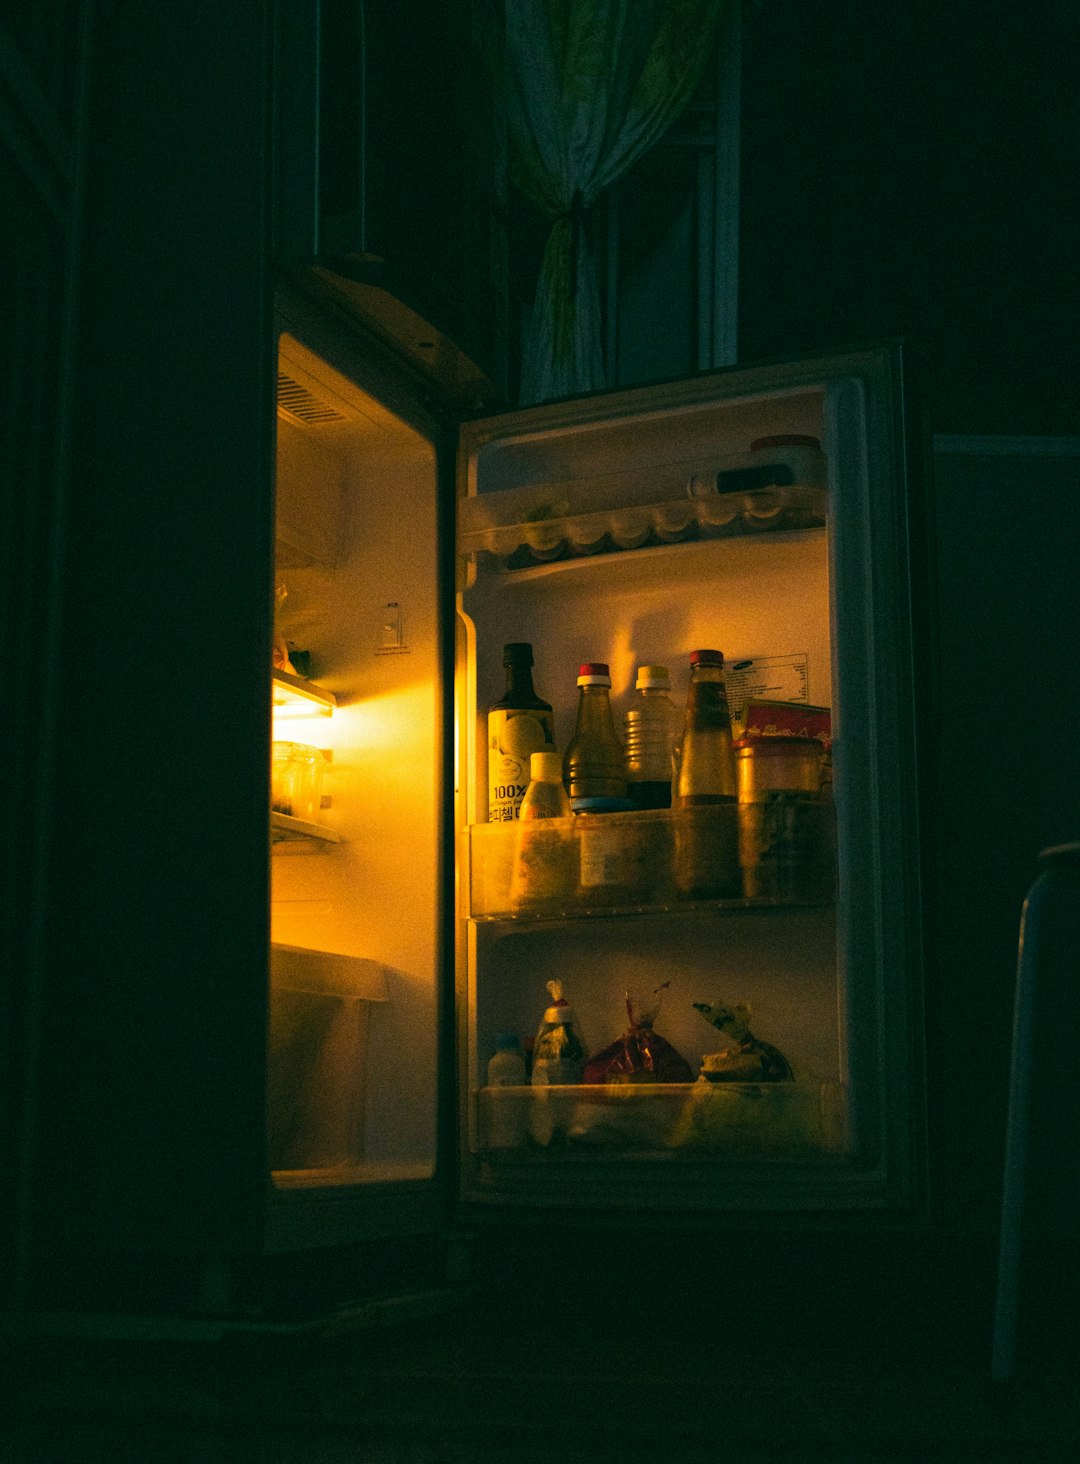 white refrigerator with bottles inside